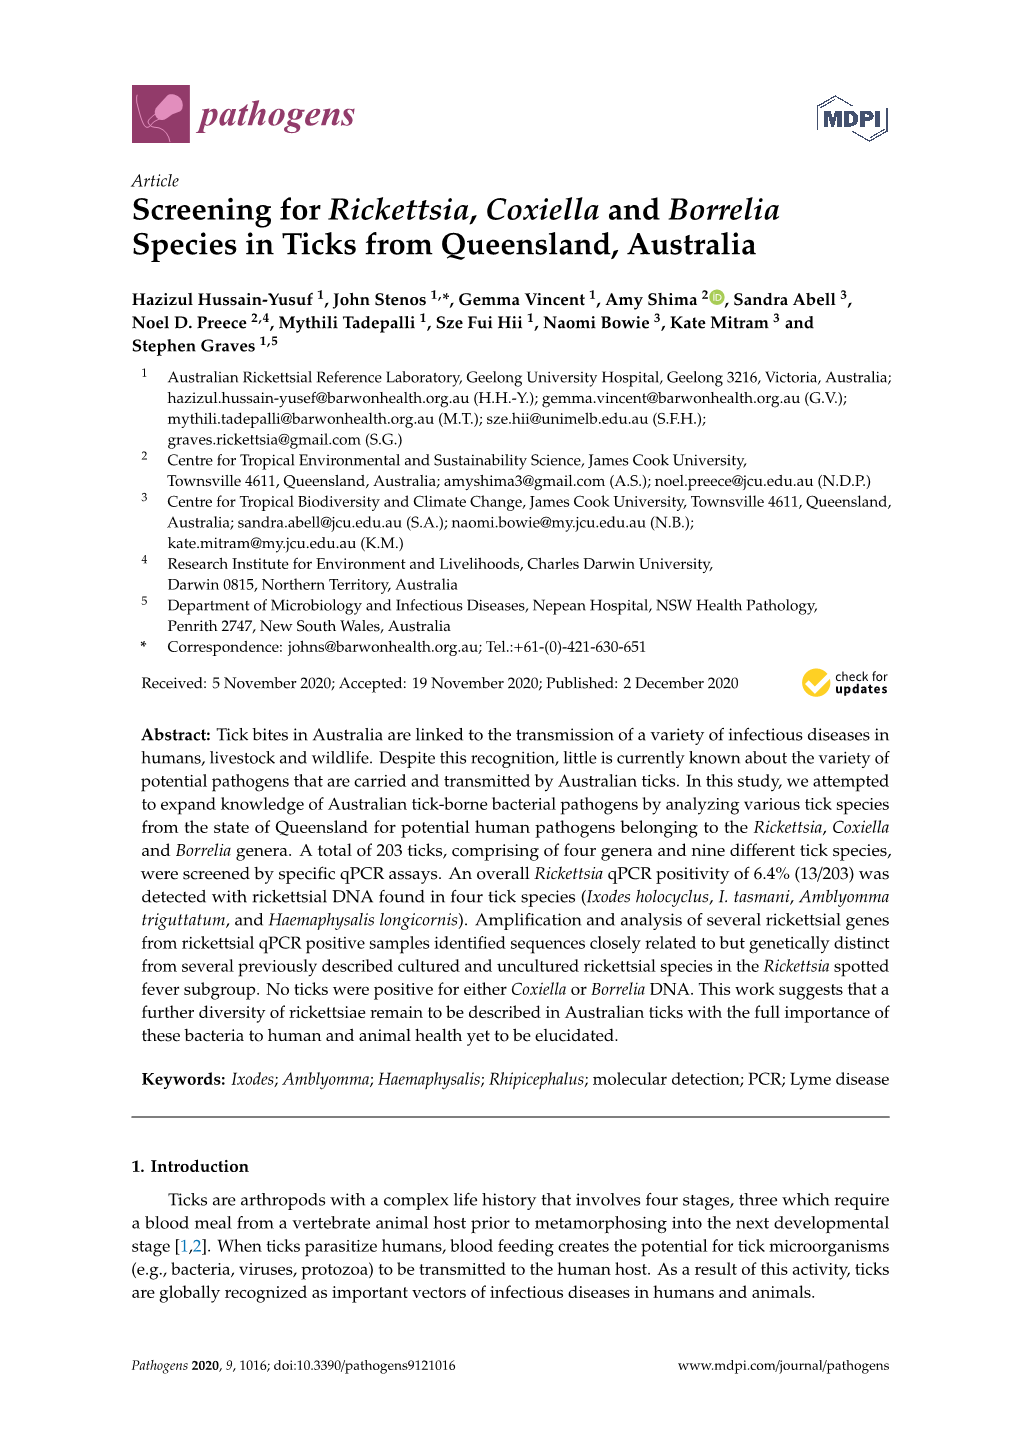 Screening for Rickettsia, Coxiella and Borrelia Species in Ticks from Queensland, Australia